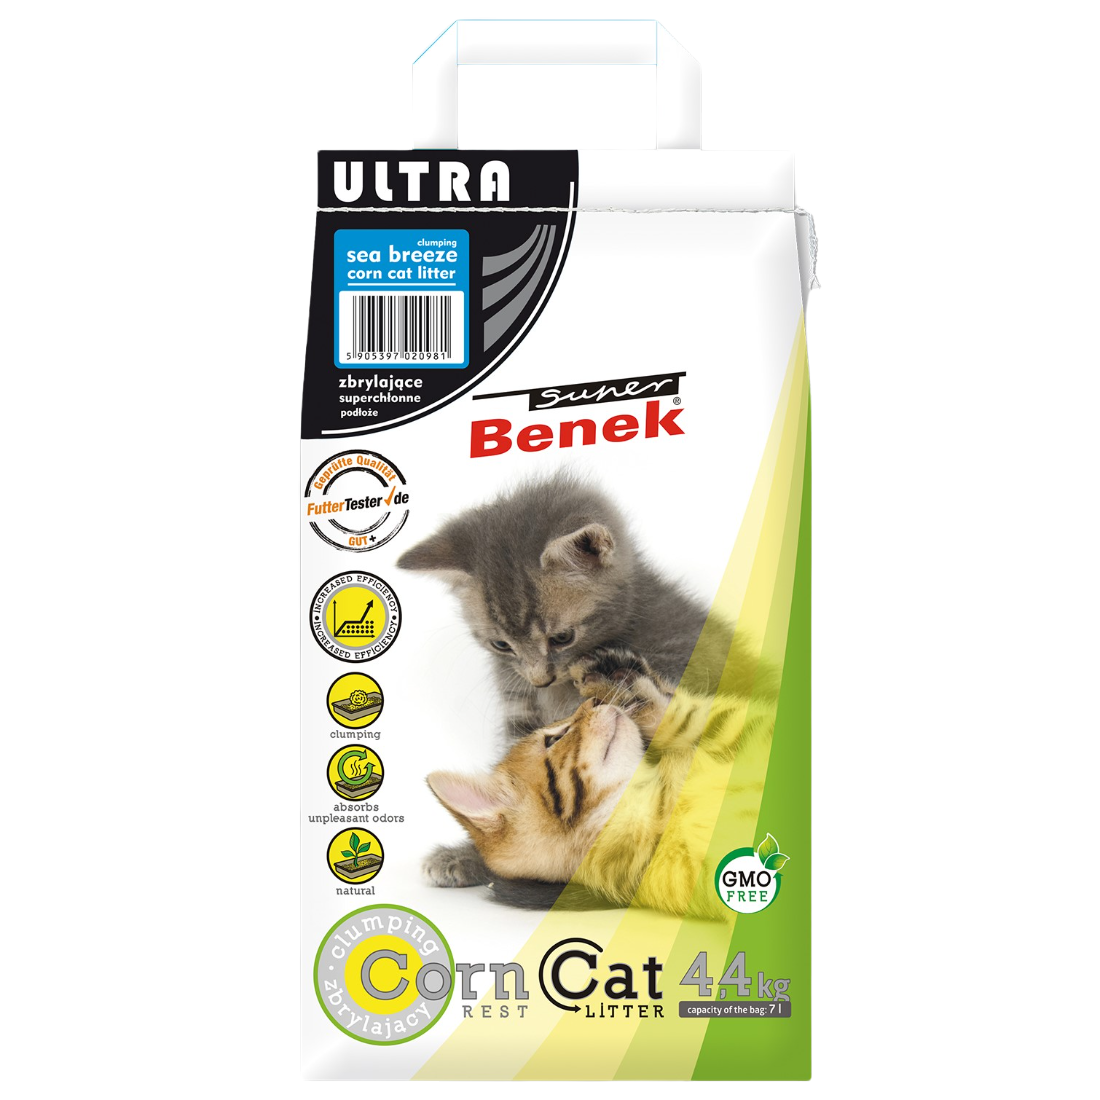 Photos - Cat Litter Super Benek Кукурудзяний наповнювач для котячого туалету  Ультра, з аромато 